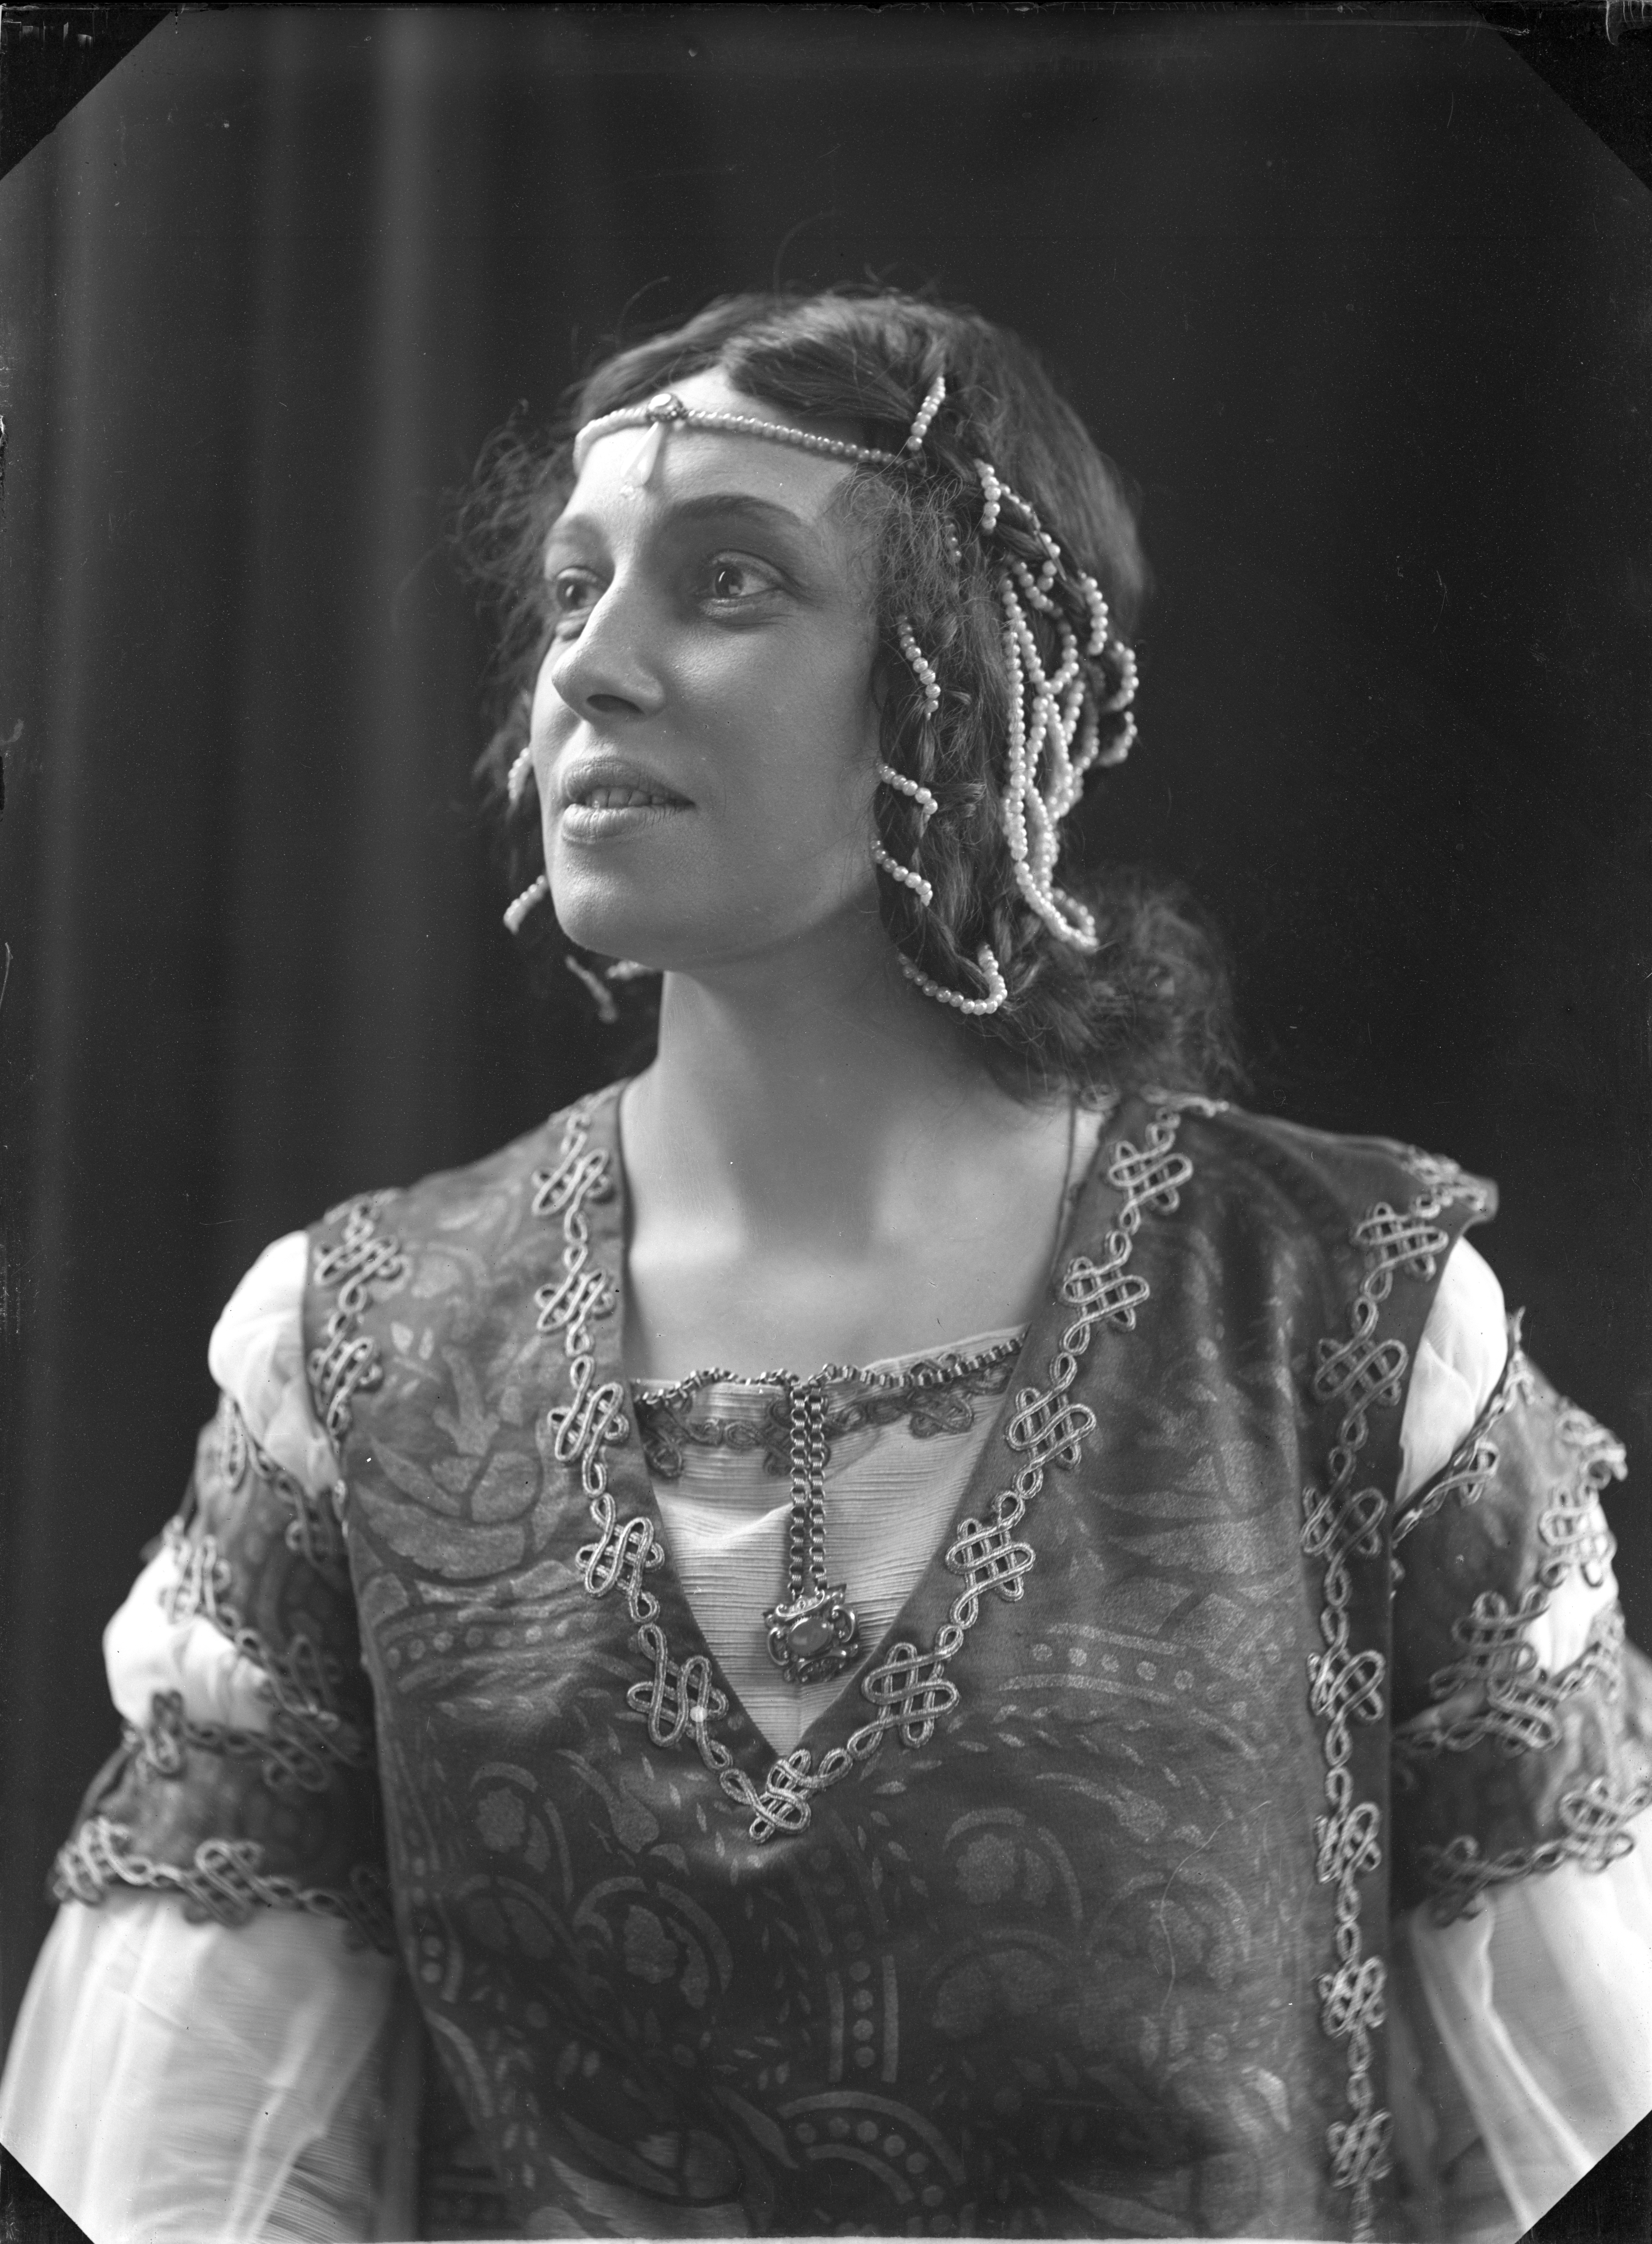 Gerda Lundequist in the title role of Monna Vanna at Svenska teatern, 1903. Photo: Anton Blomberg (1862-1936). Musik- och teaterbiblioteket, Stockholm (GL151)